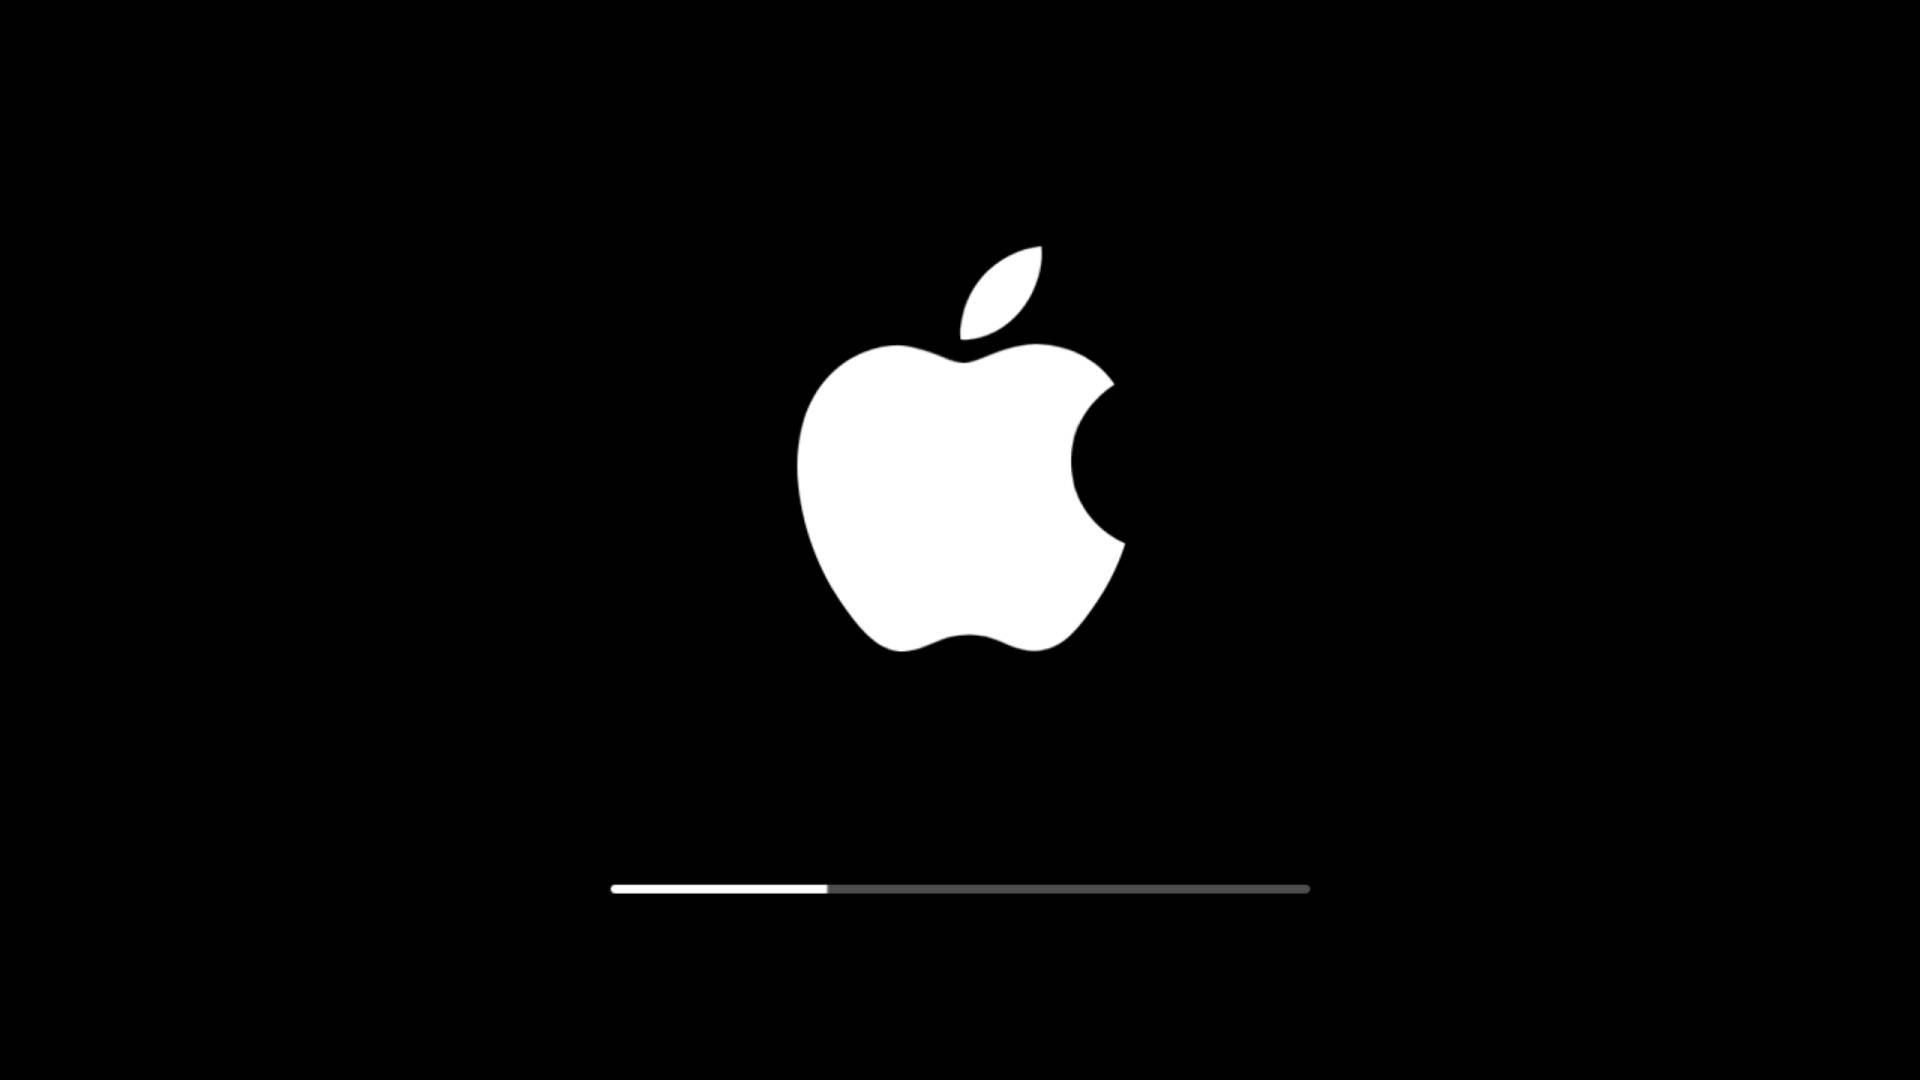 Apple Logo Loading Screen Wallpaper